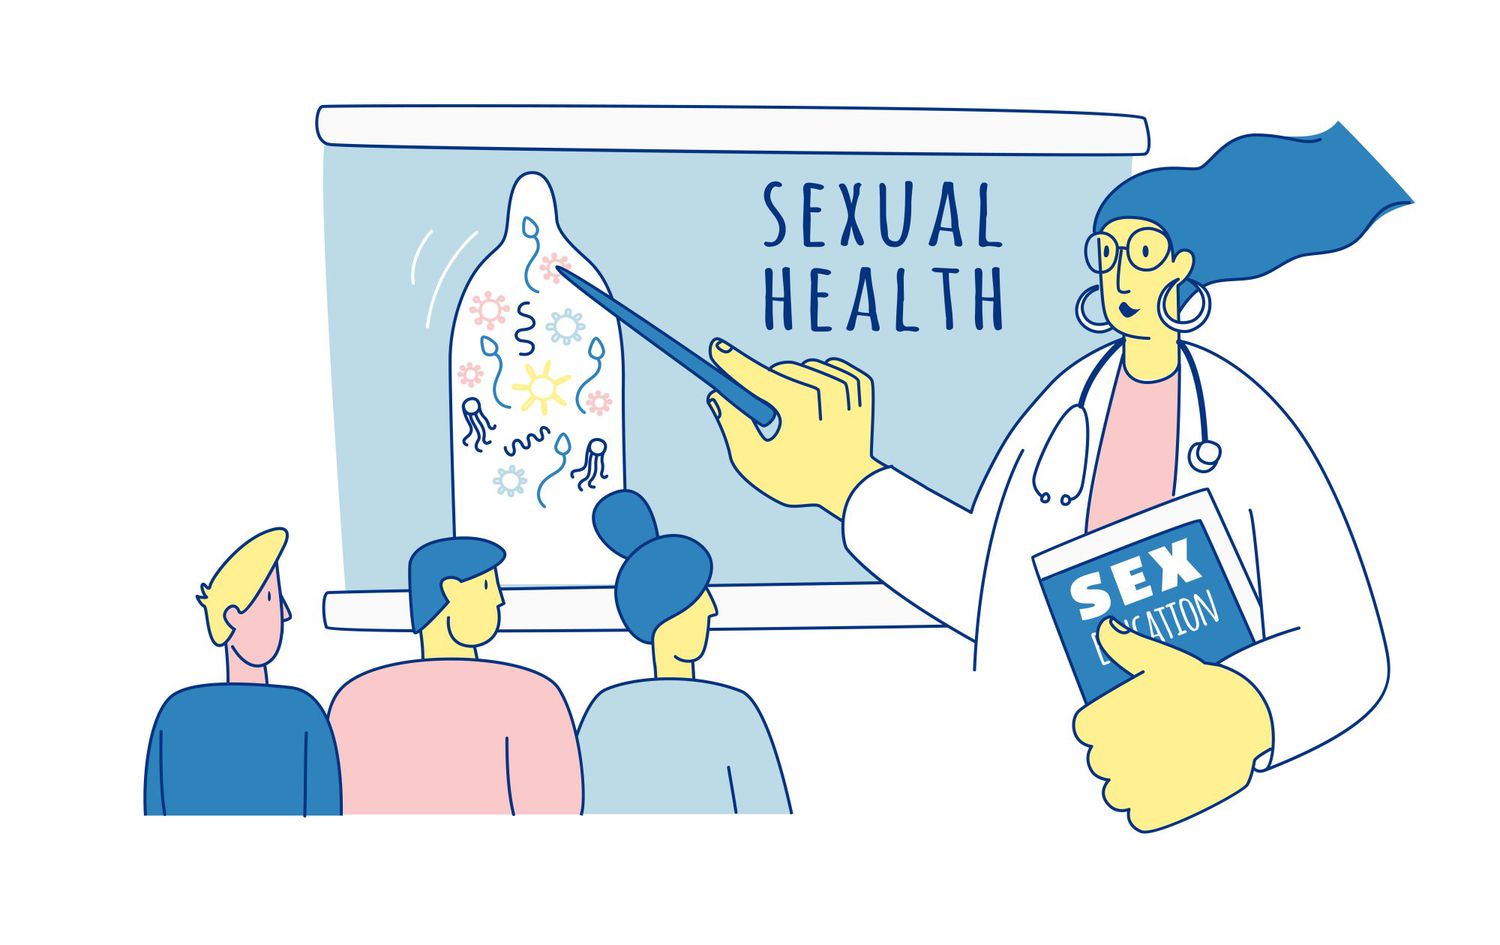 School Sexuality Education Program. School's lesson on Safe Sex teens